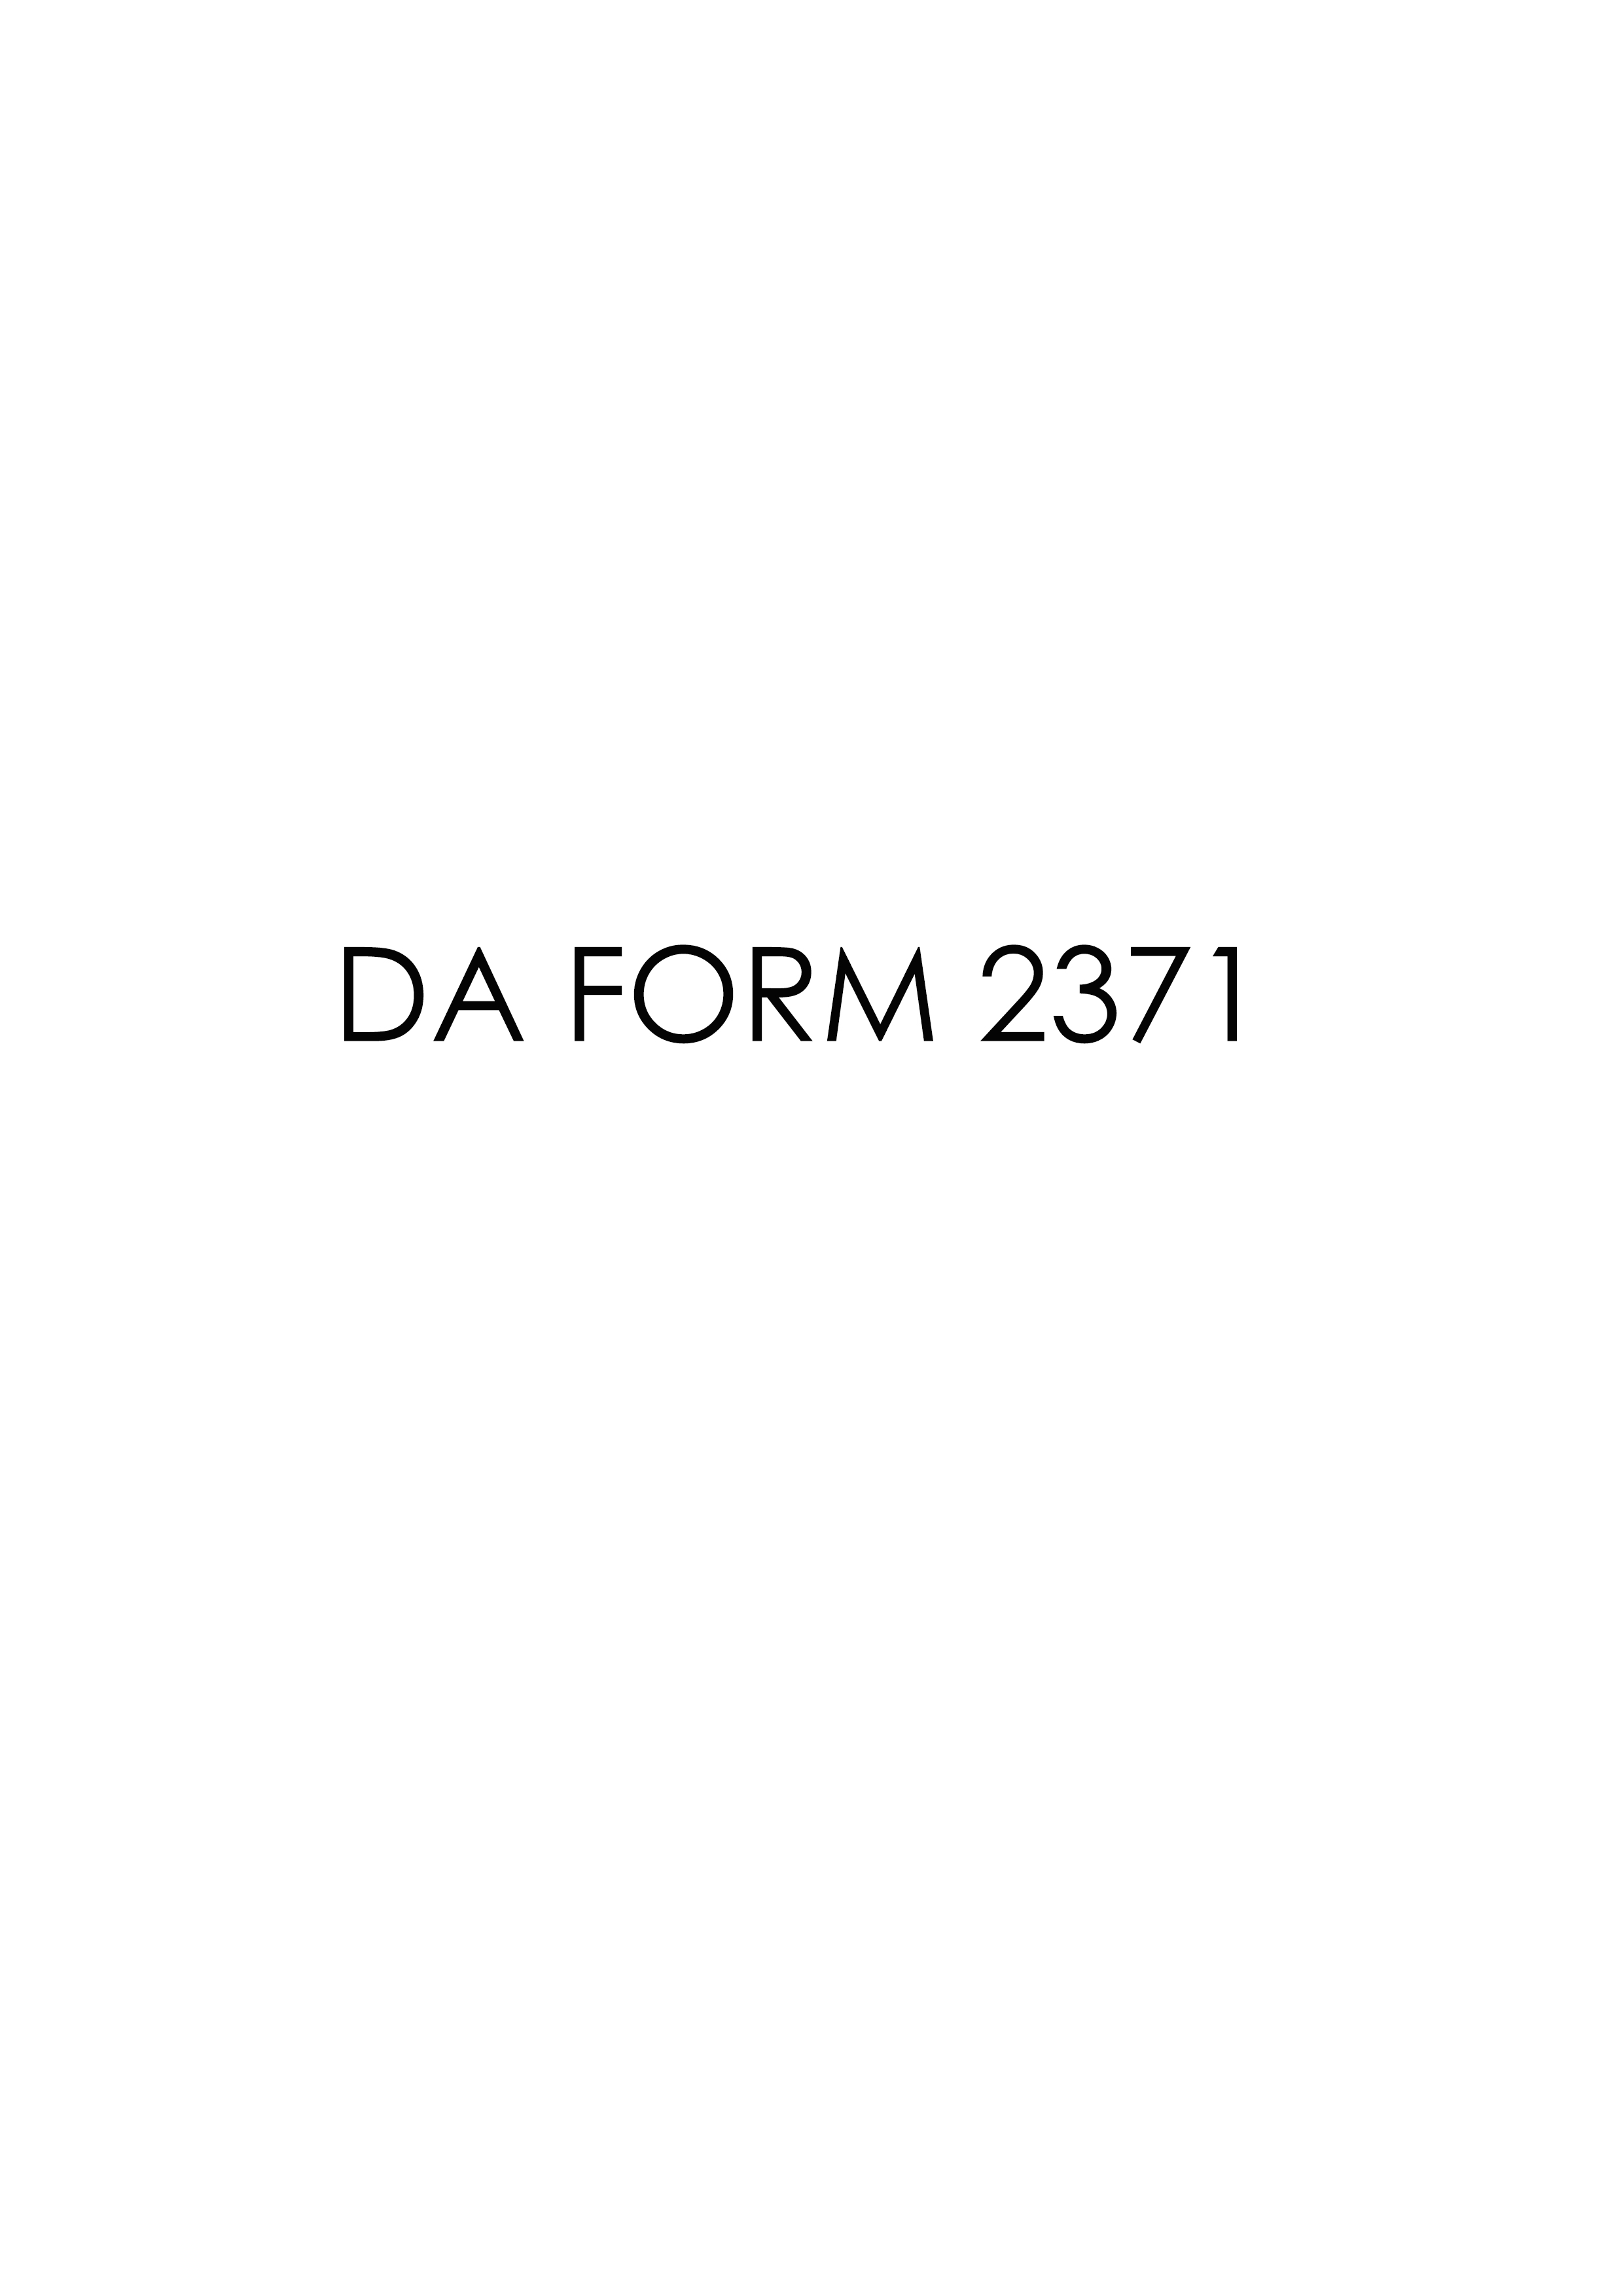 Download da 2371 Form